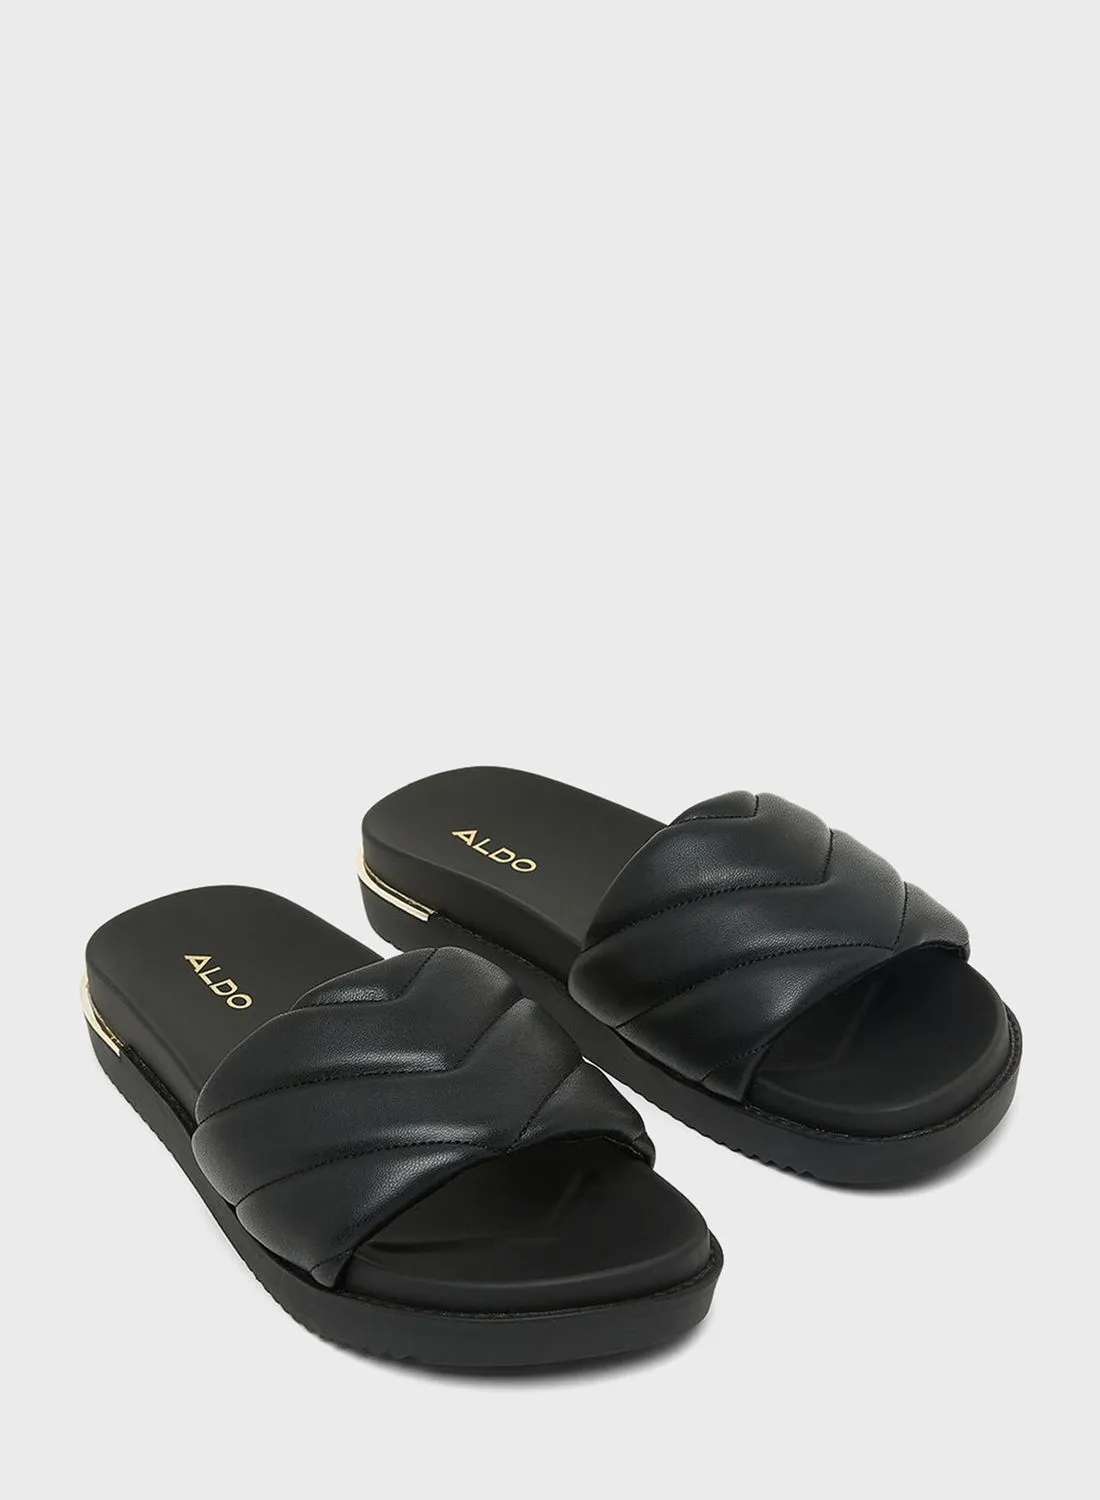 ALDO Acaswen Flat Sandals